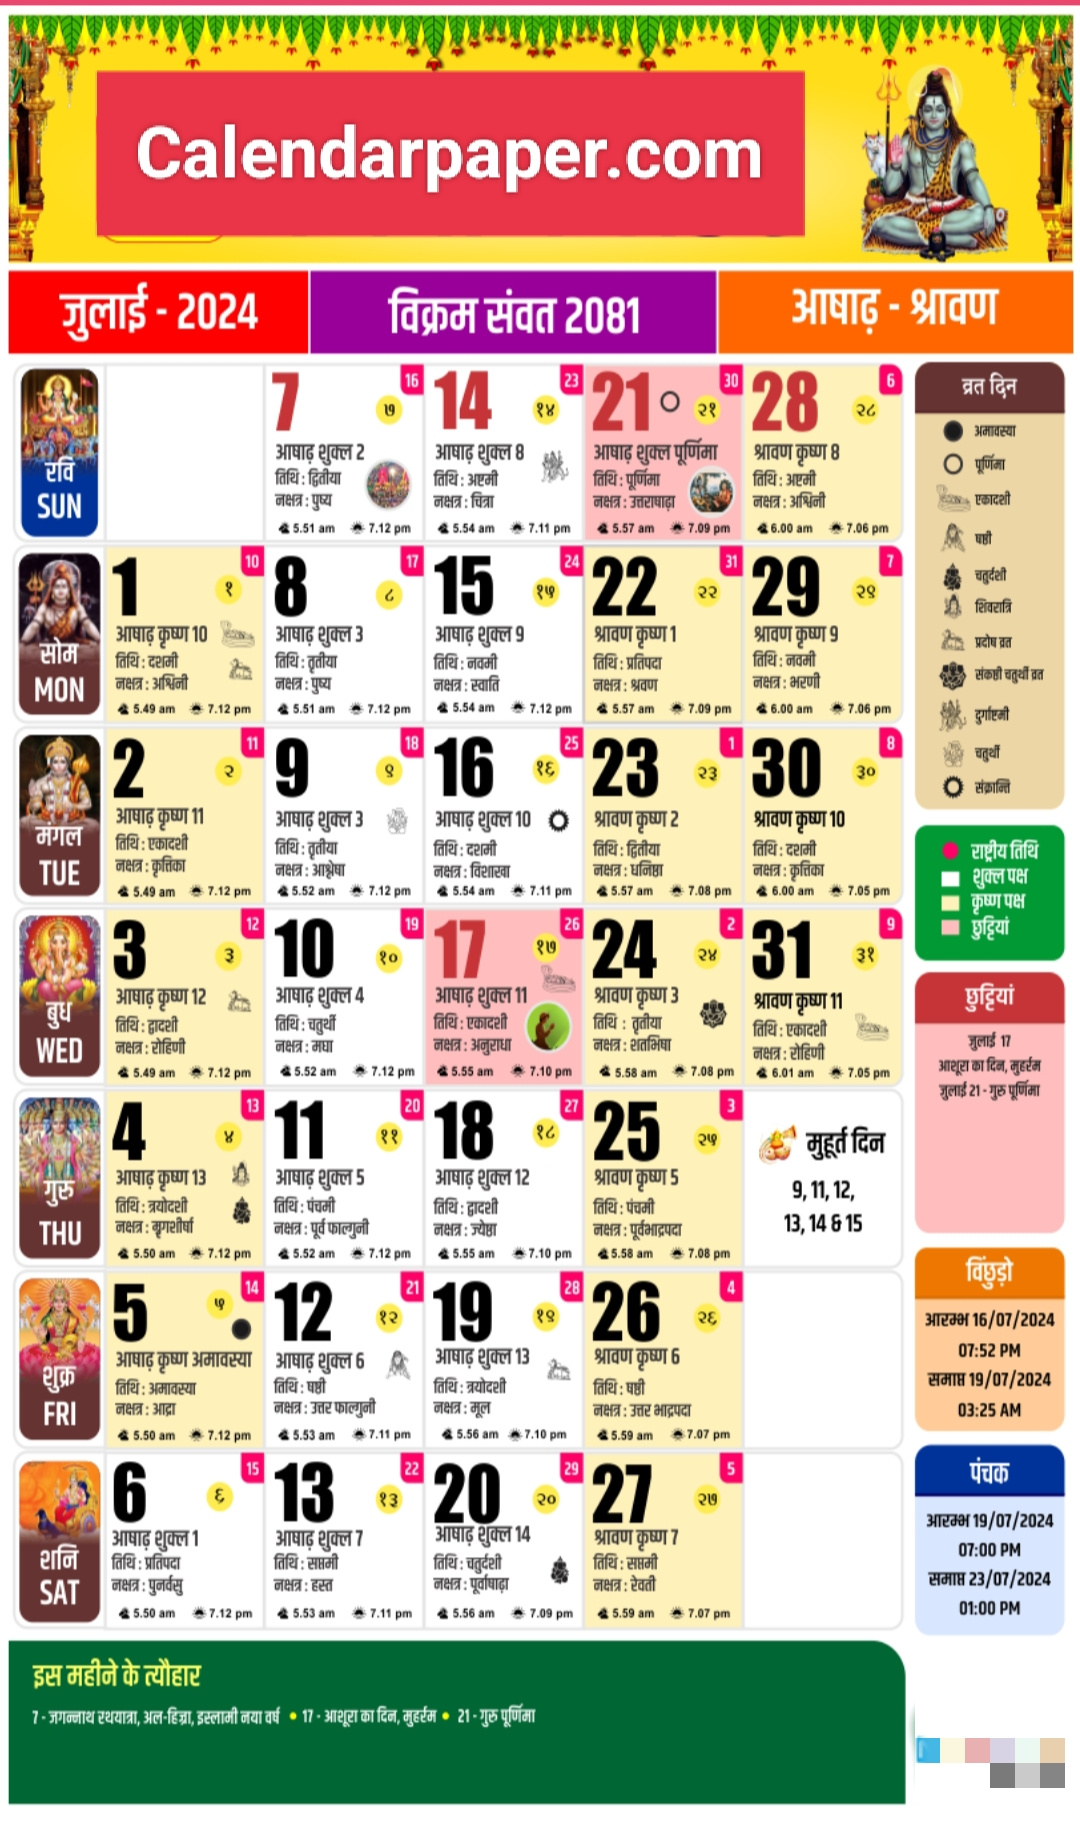 July 2024 Hindu Calendar All Festivals, Tithi, Panchang, And with regard to 9th July 2024 Hindu Calendar